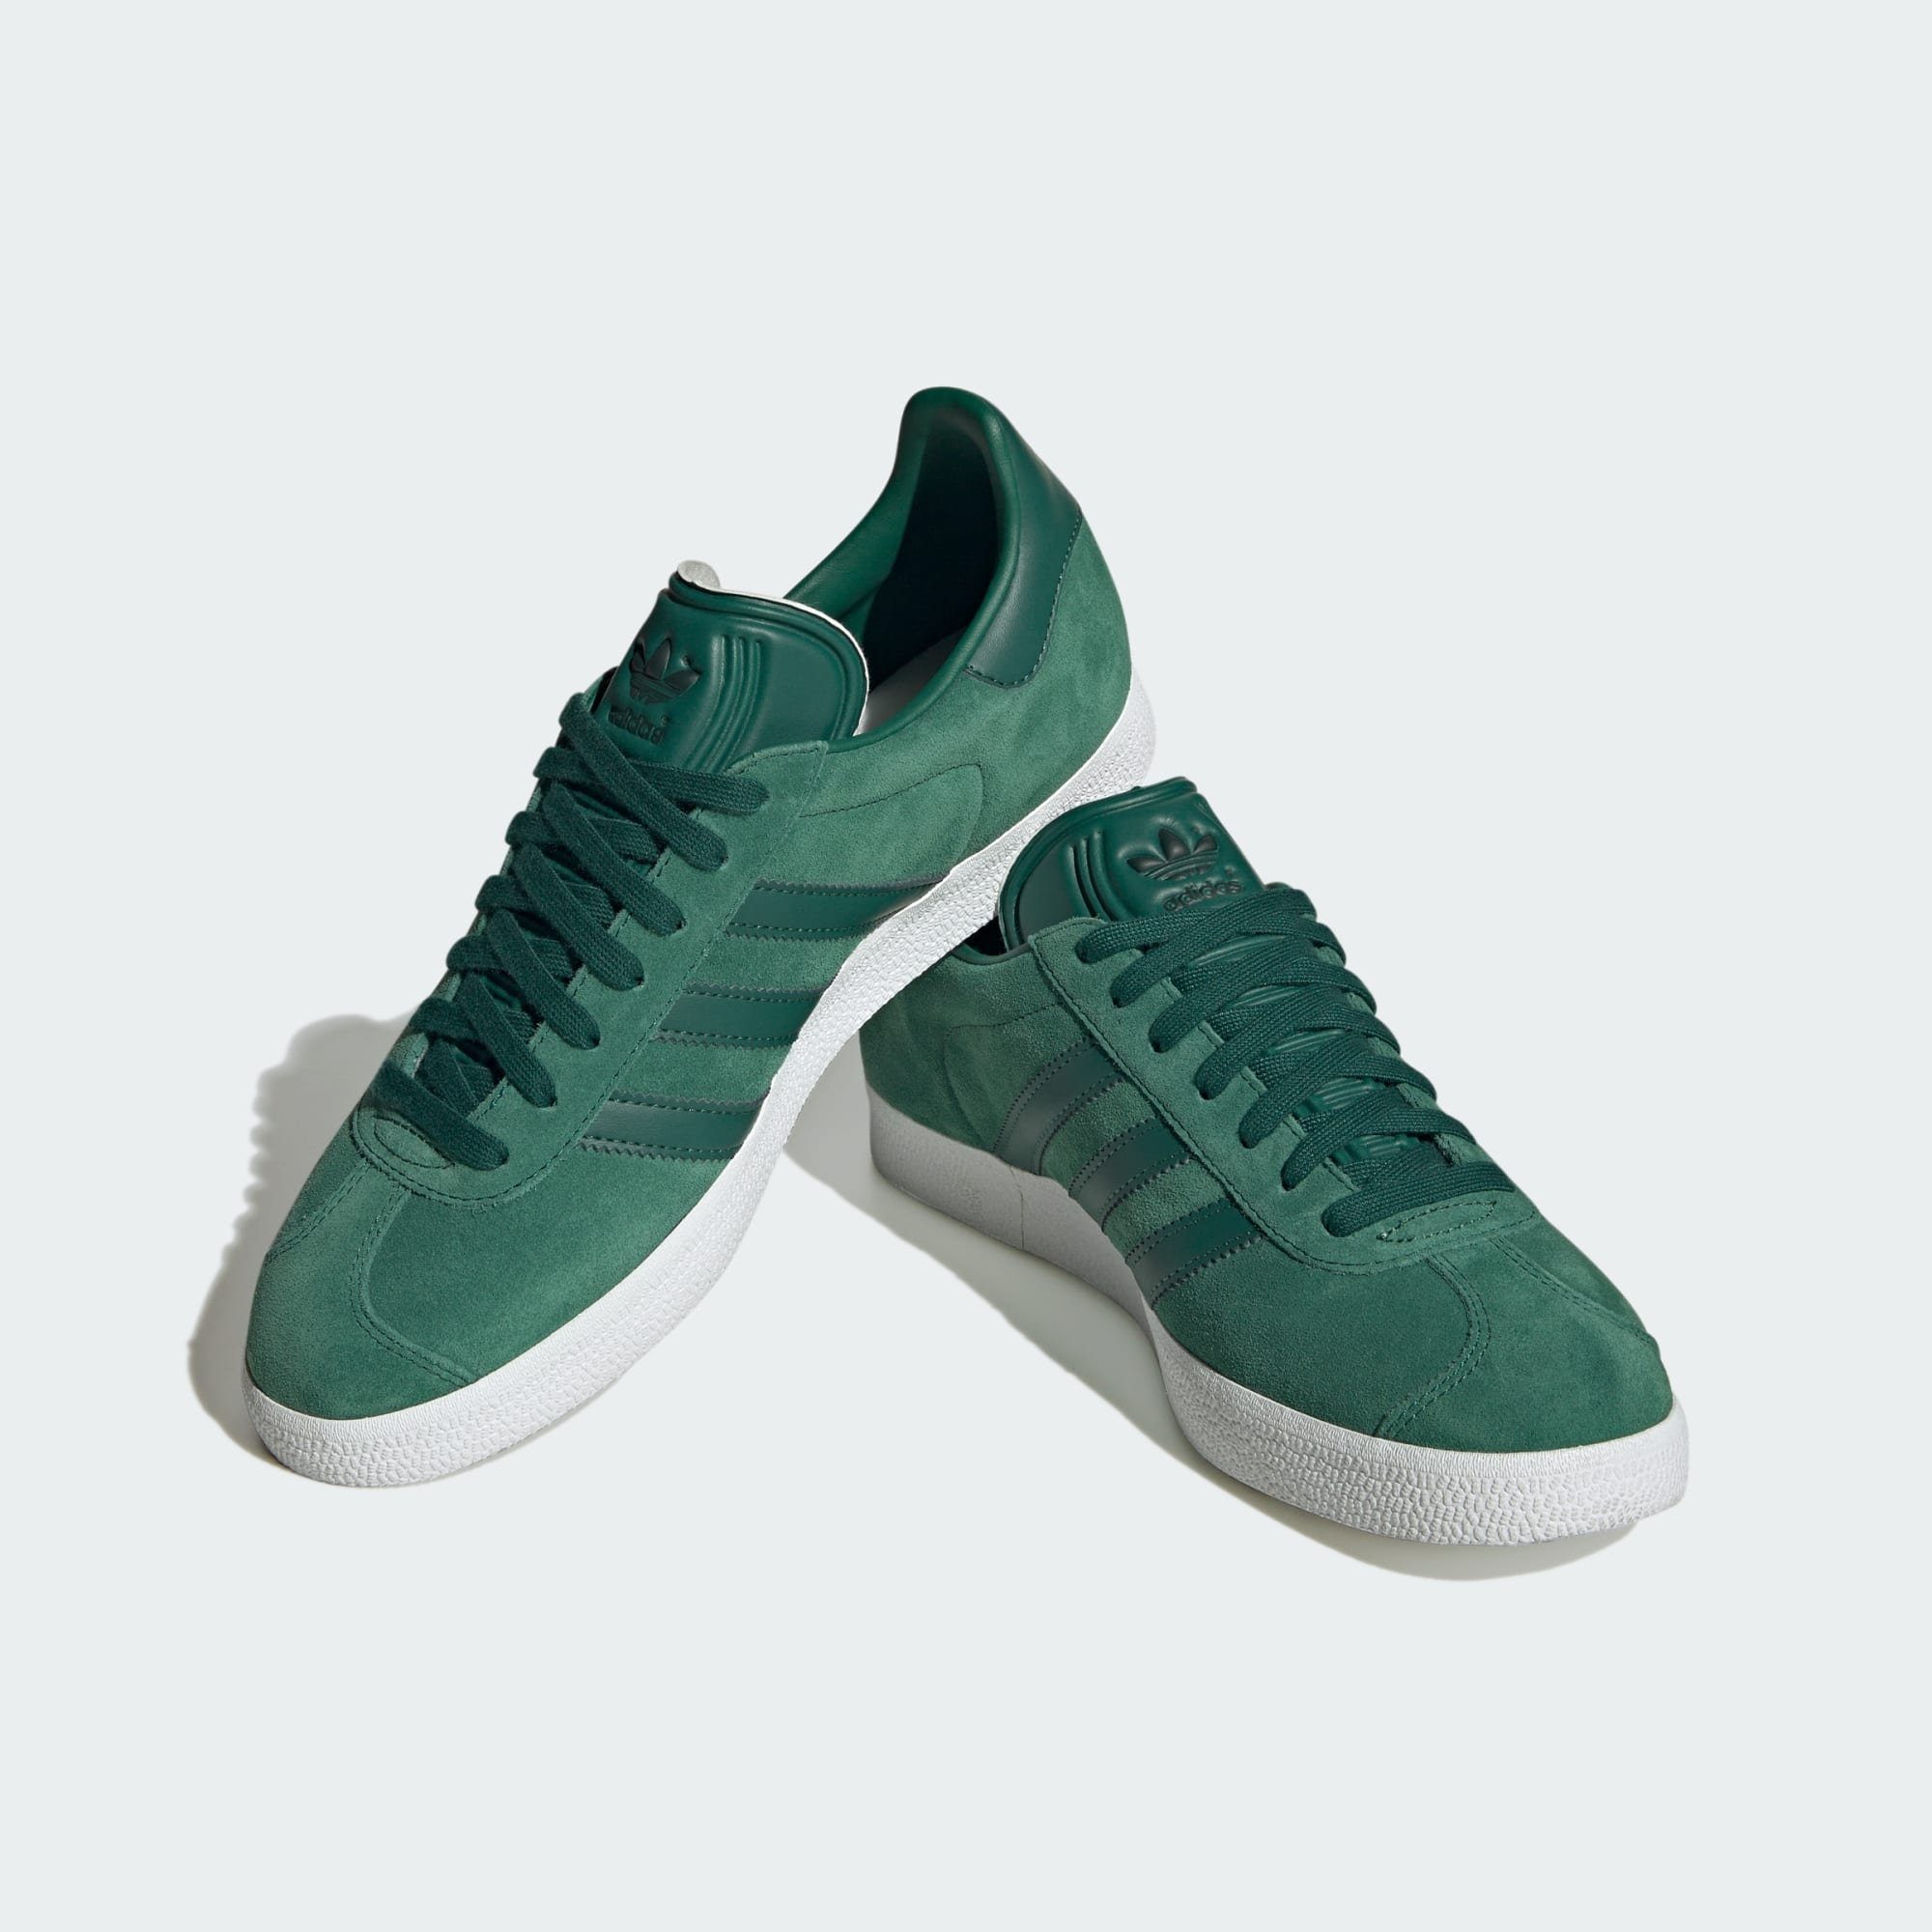 adidas Originals GAZELLE SCHUH Sneaker Tech Forest / Collegiate Green / Cloud White